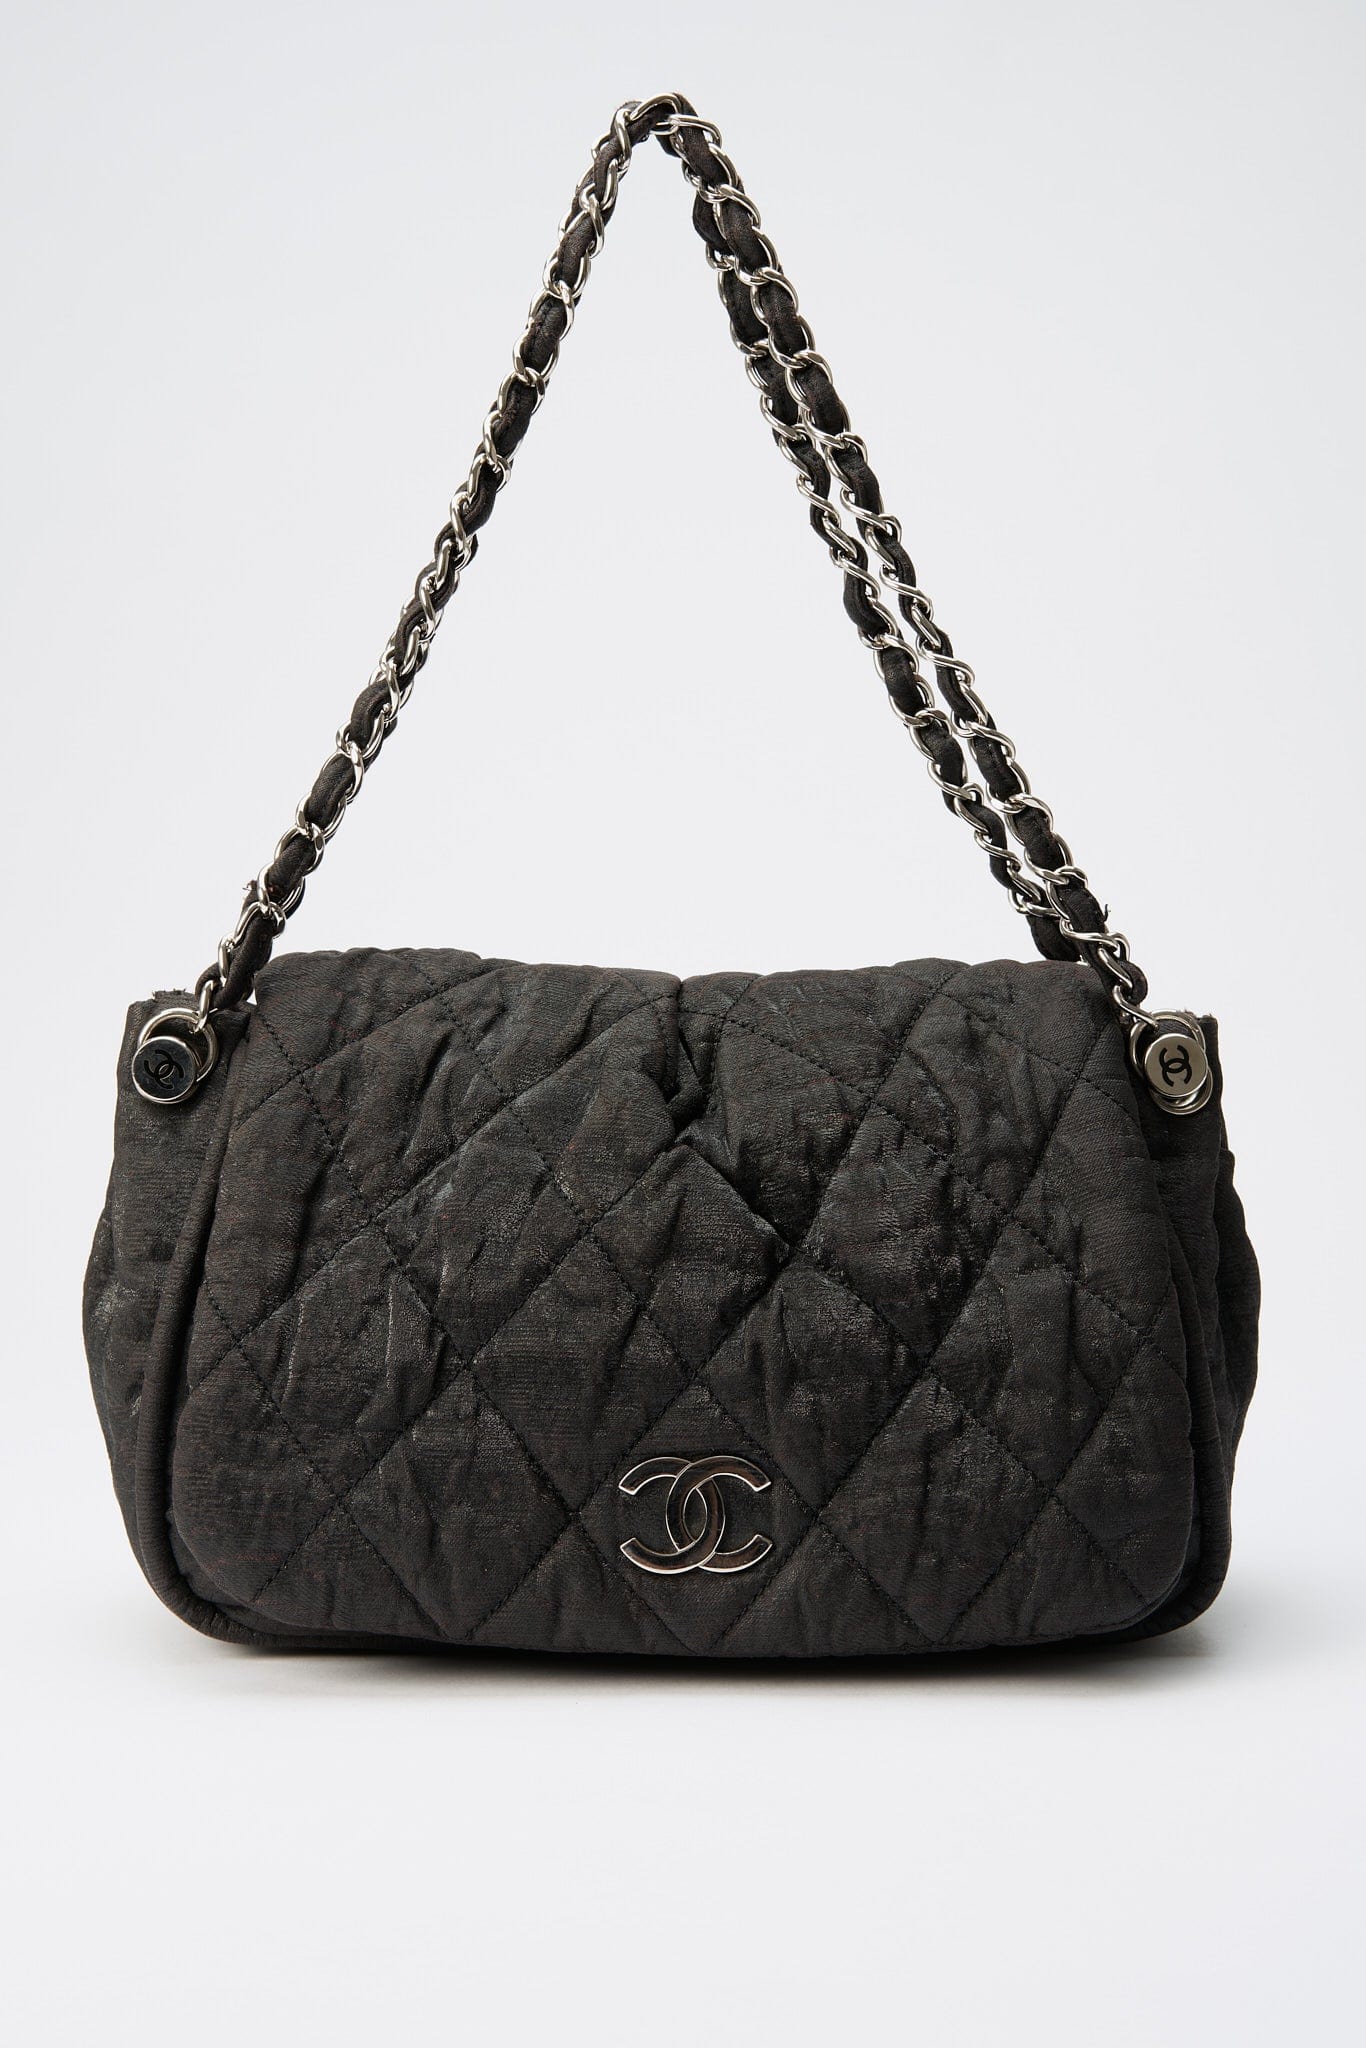 Chanel Black Nylon Flap Bag 1806